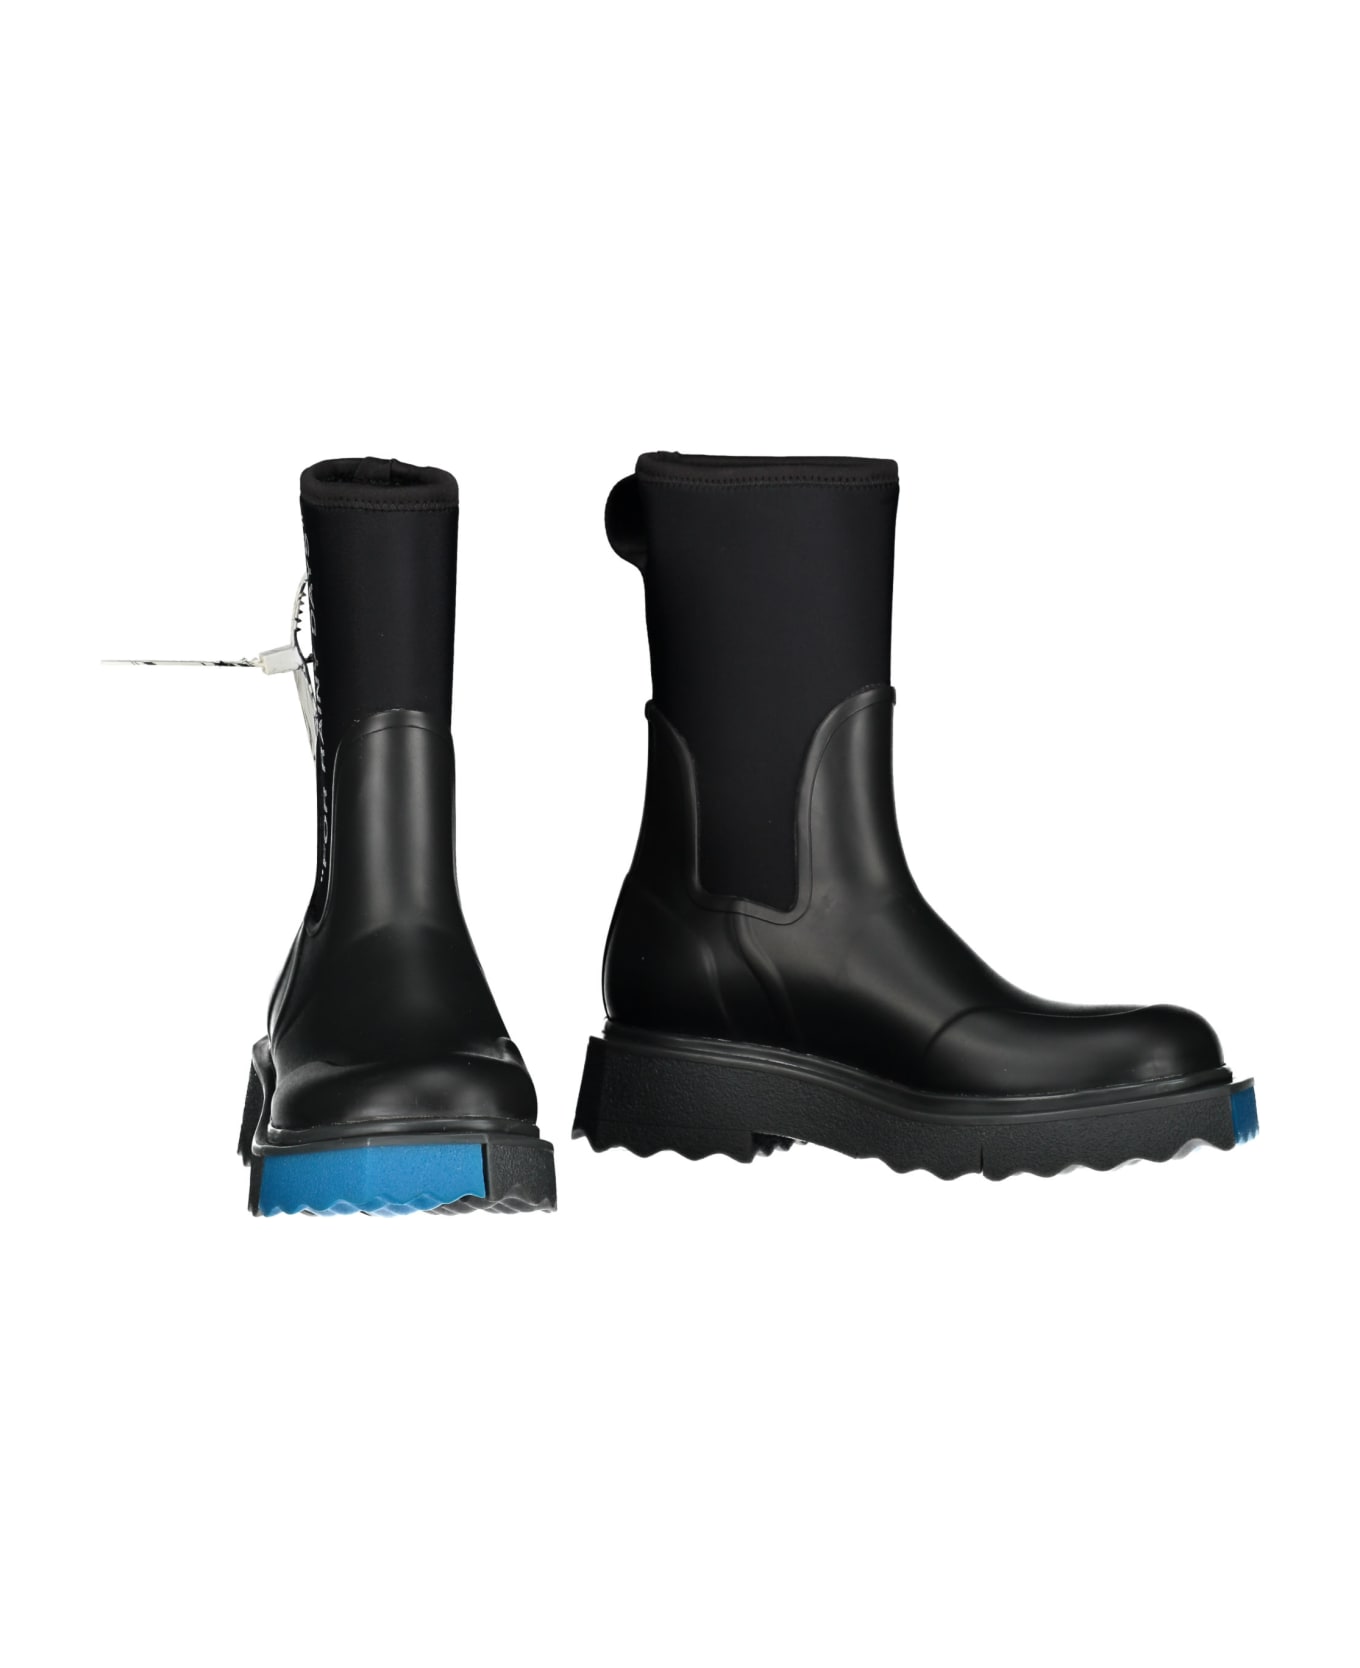 Off-White Rubber And Neoprene Rain Boots - black